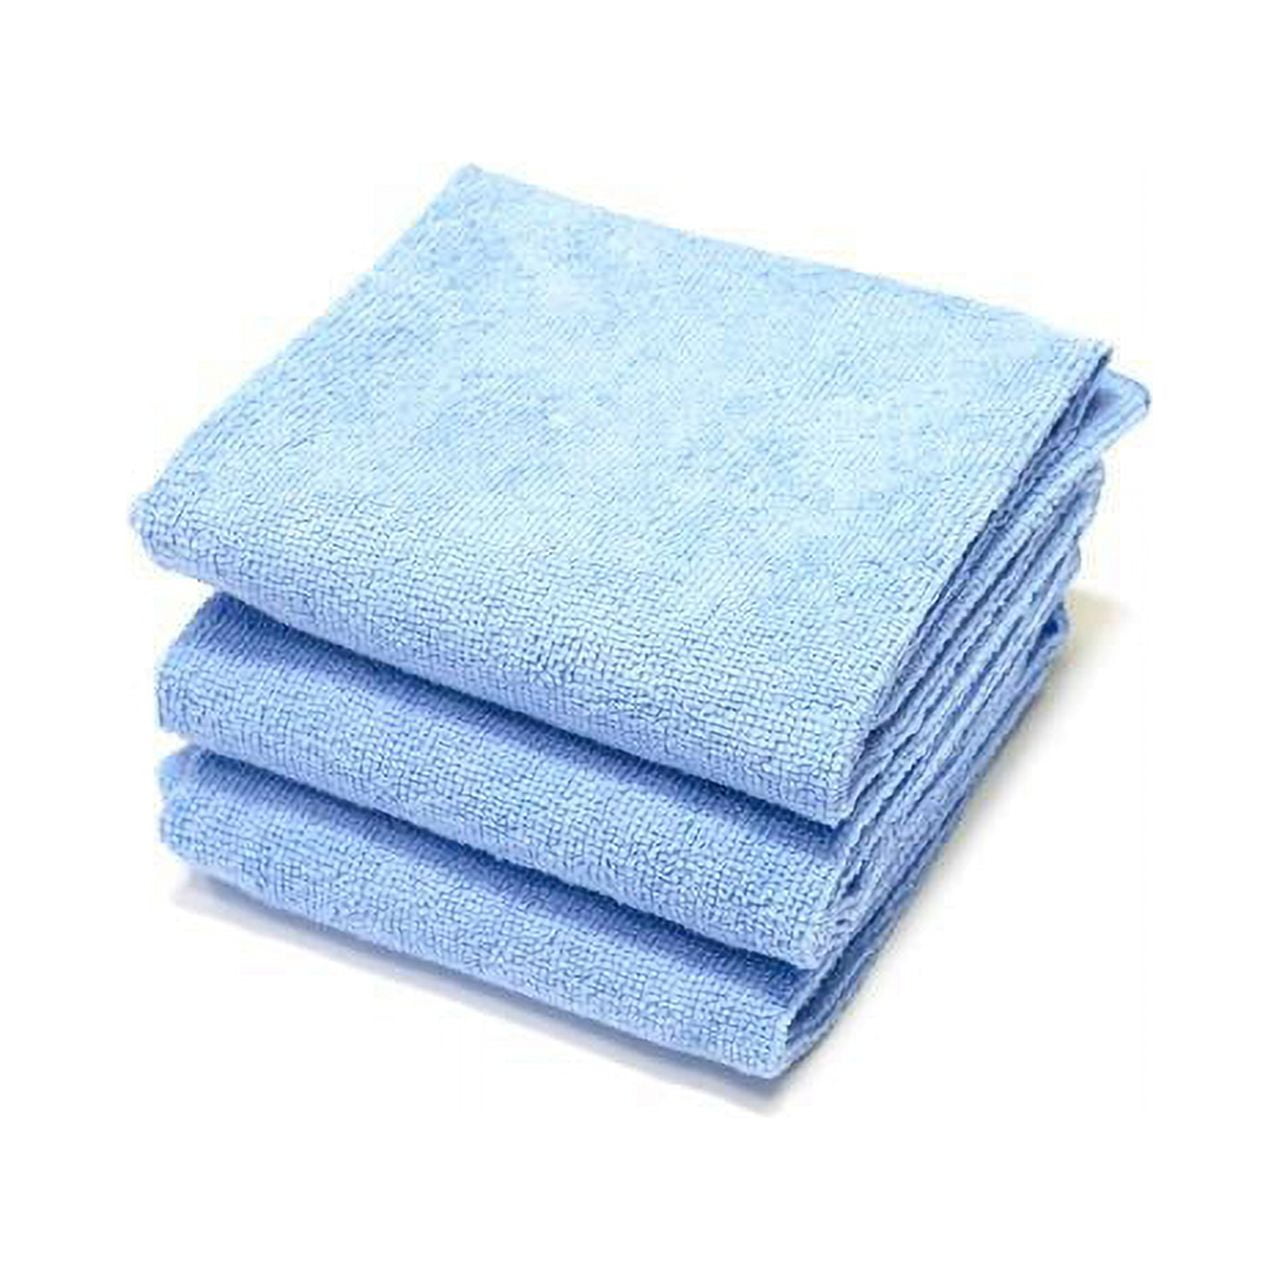 SIMONIZ Terry Cloth Towels, 16 x 19-in,White, 8-pk